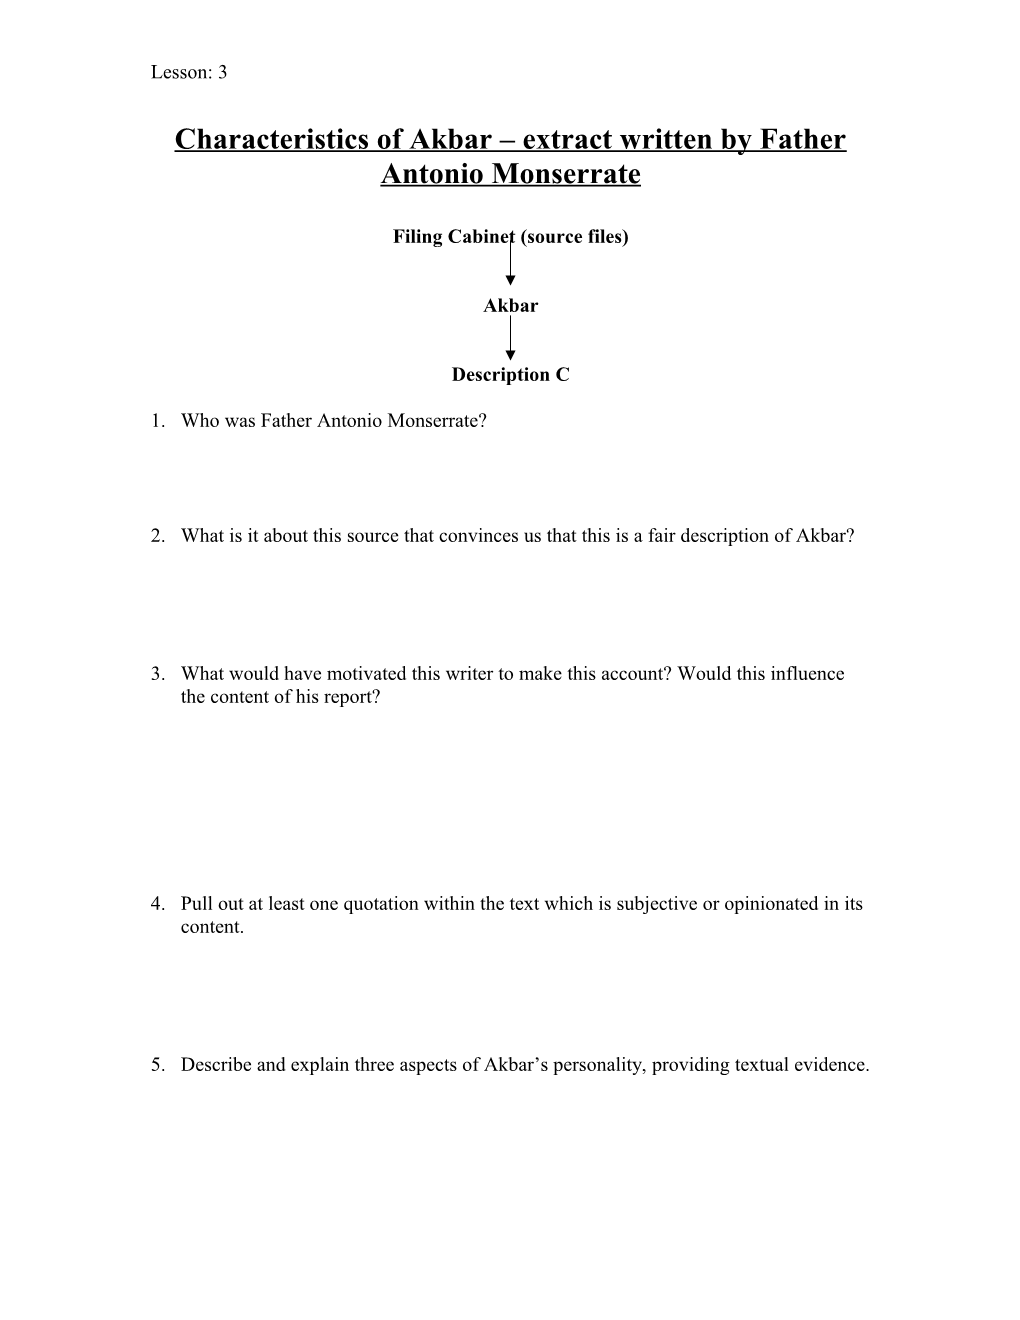 Characteristics of Akbar Extract Written by Father Antonio Monserrate